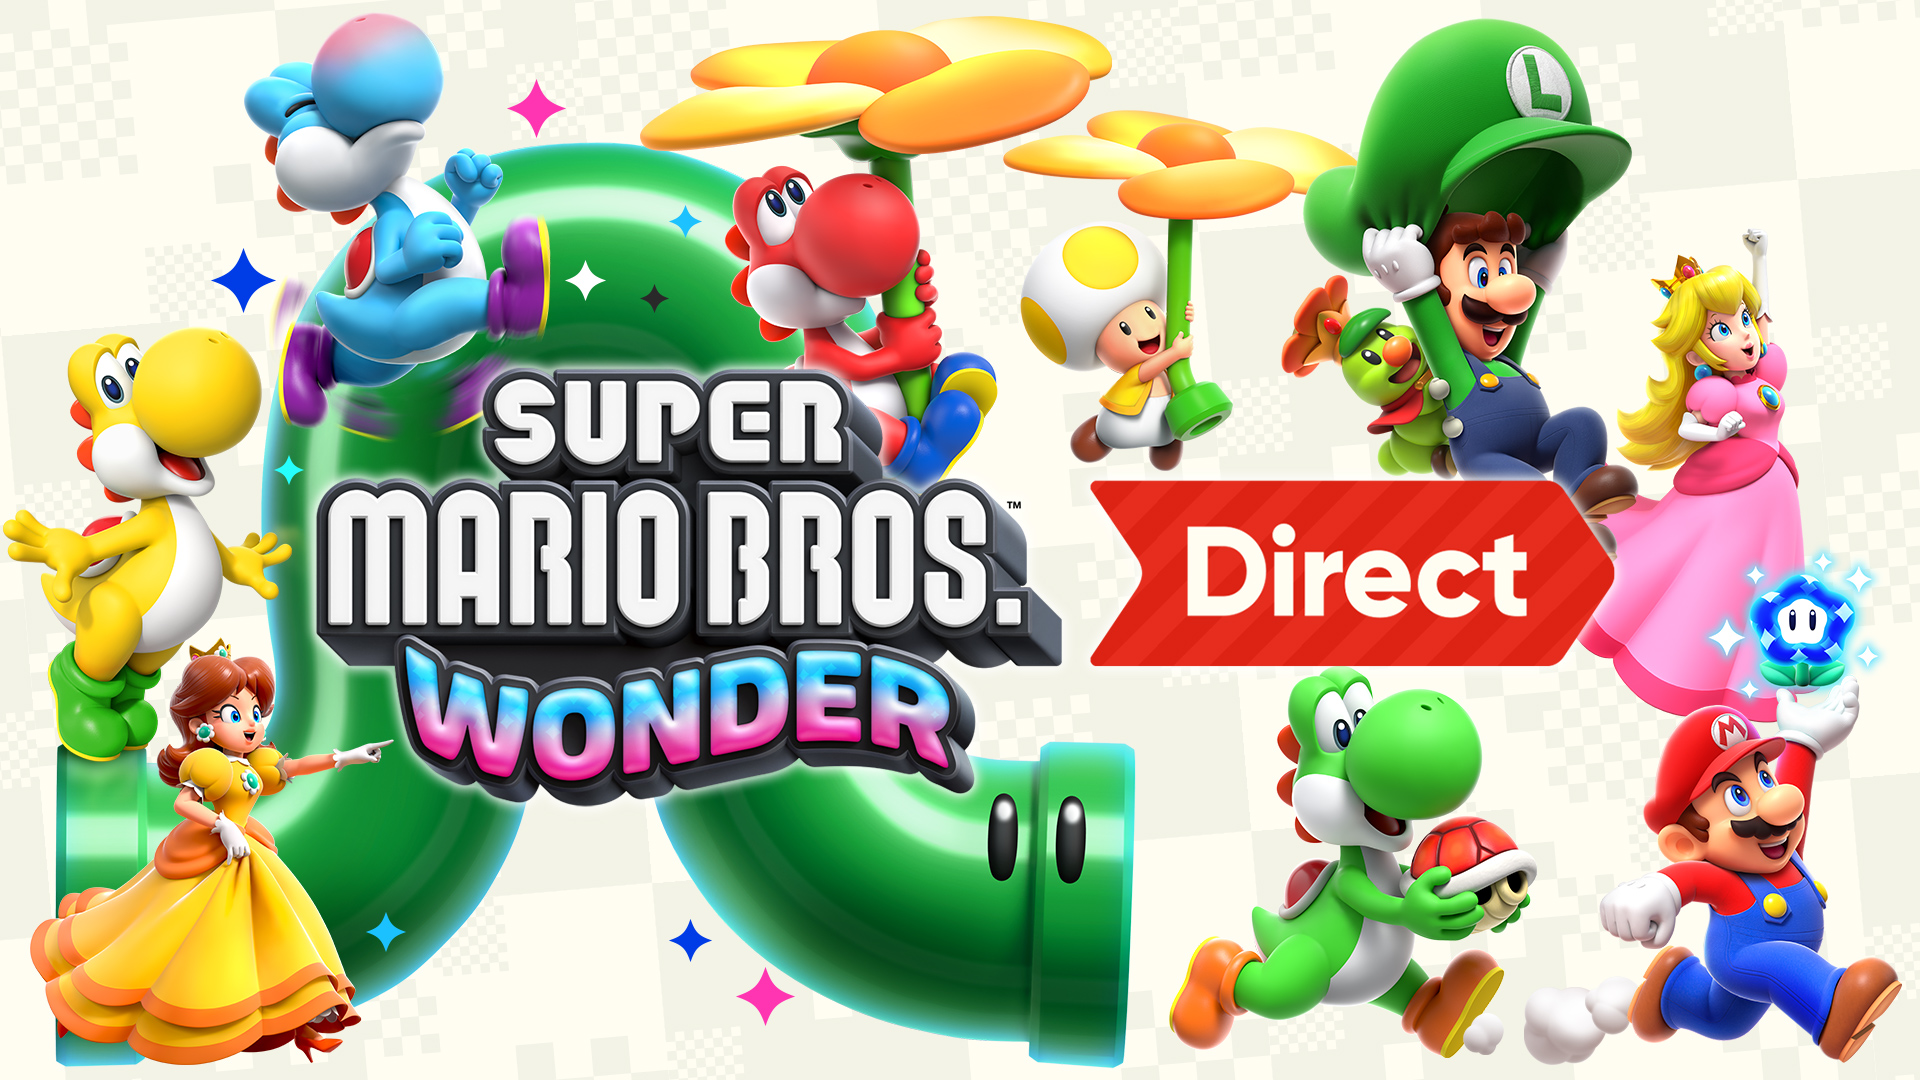 Super Mario Bros. Wonder Nintendo Direct é anunciada para 31/08